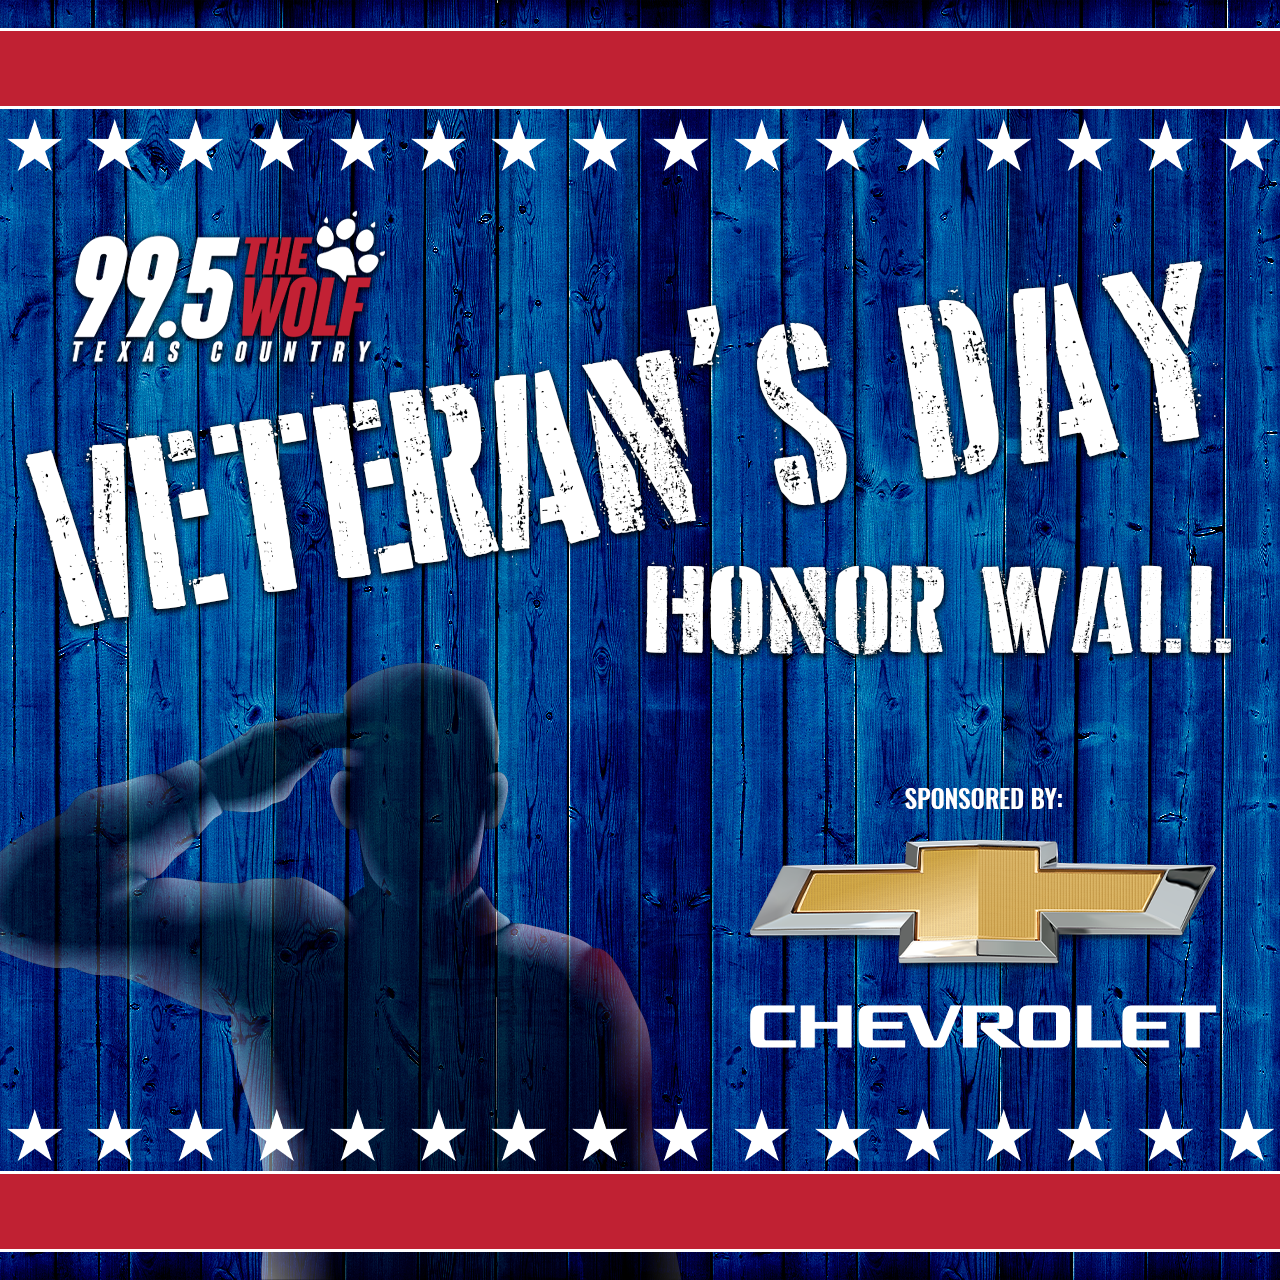 Veteran’s Day Honor Wall